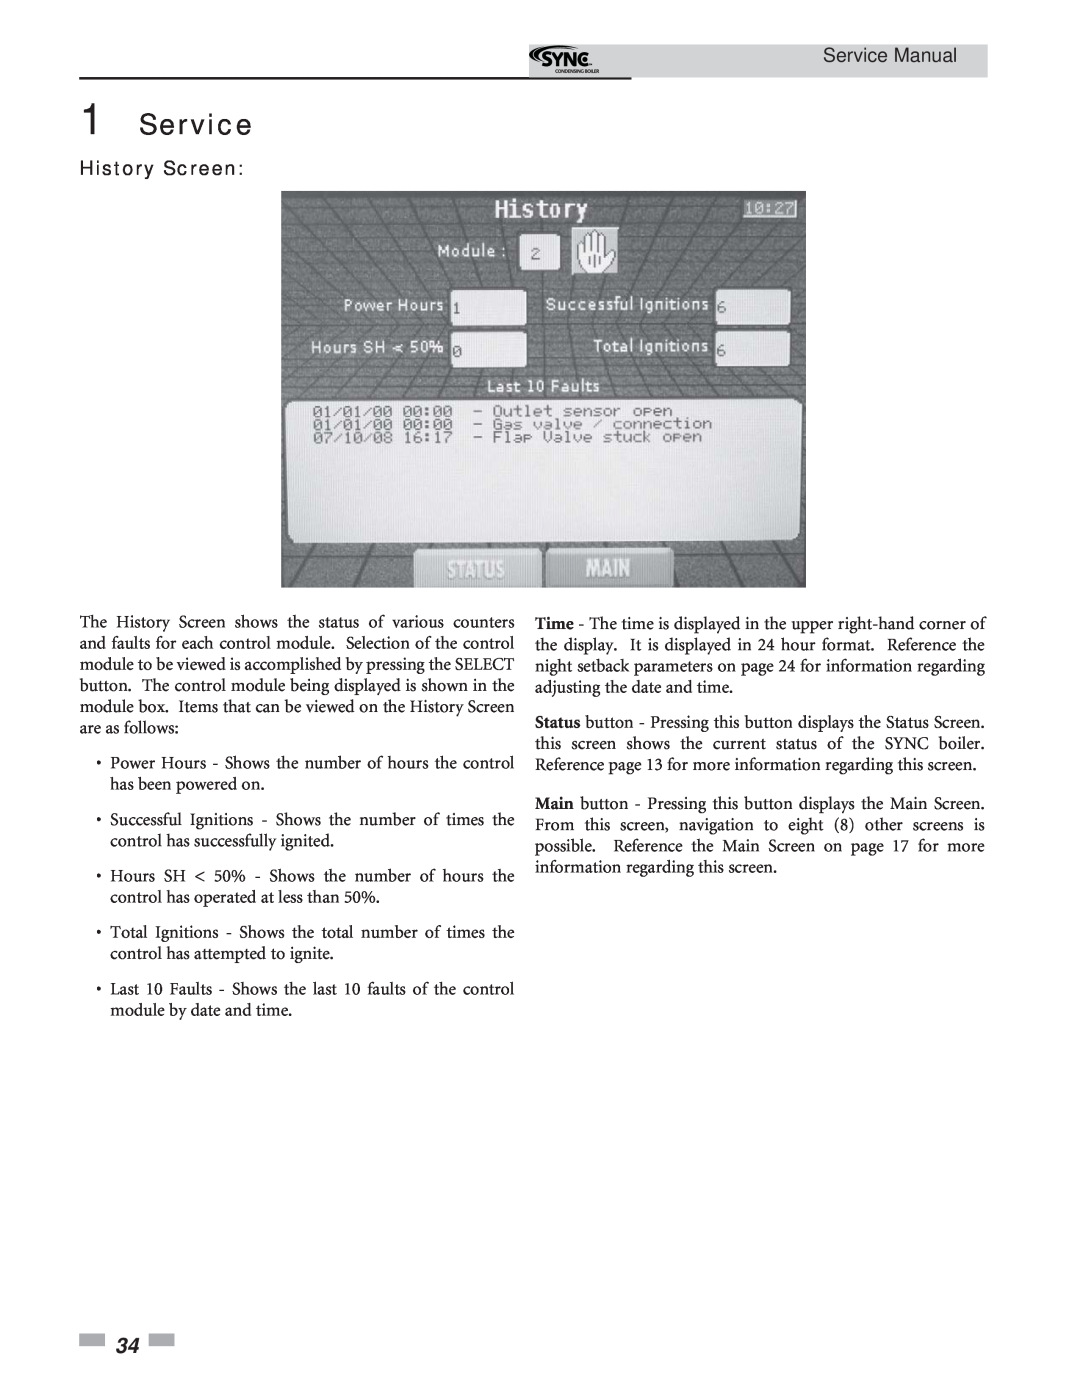 Lochinvar 1.3 service manual Service Manual, History Screen 